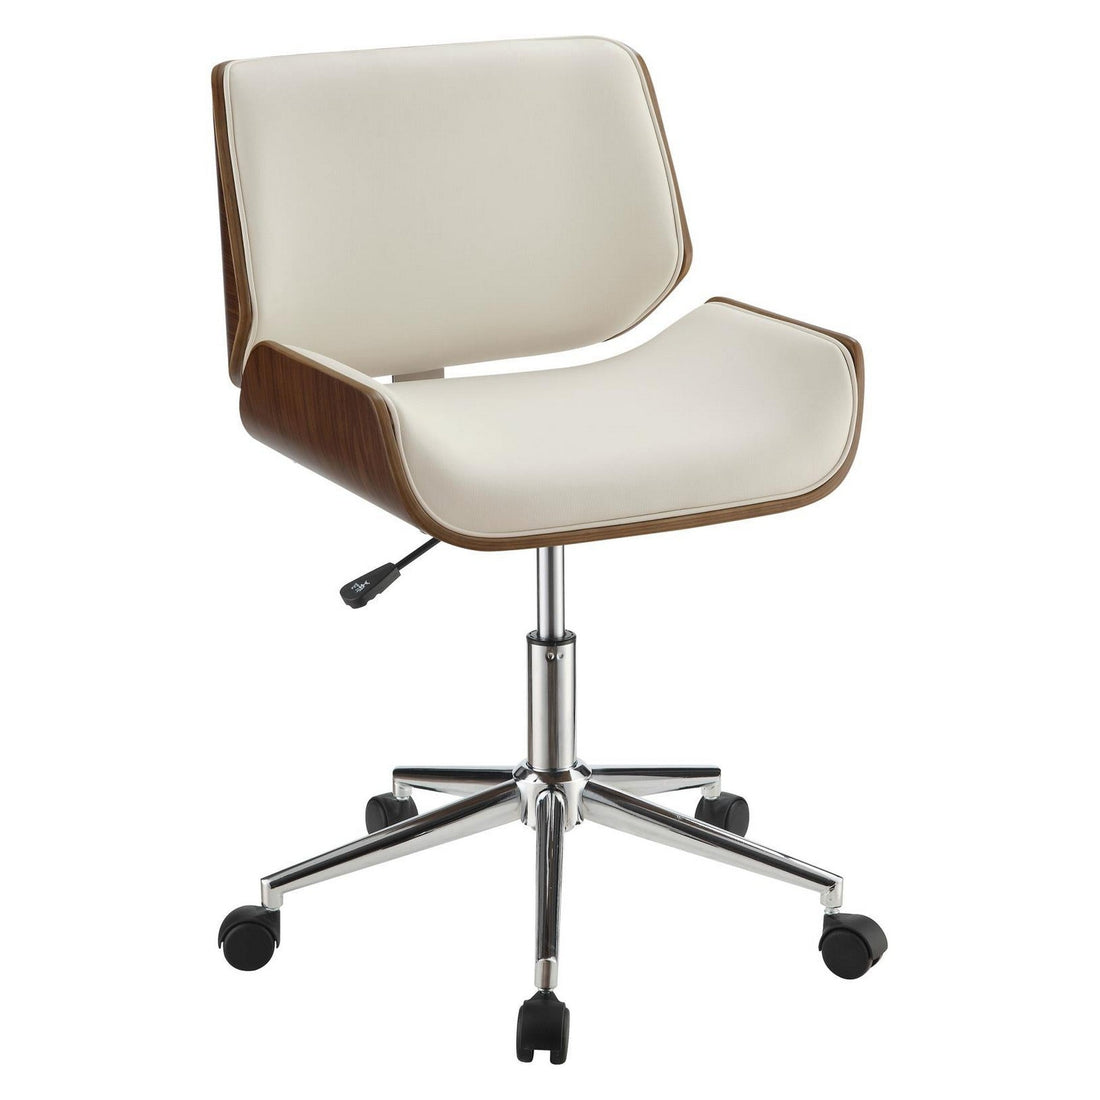 Addington Adjustable Height Office Chair Ecru and Chrome 800613